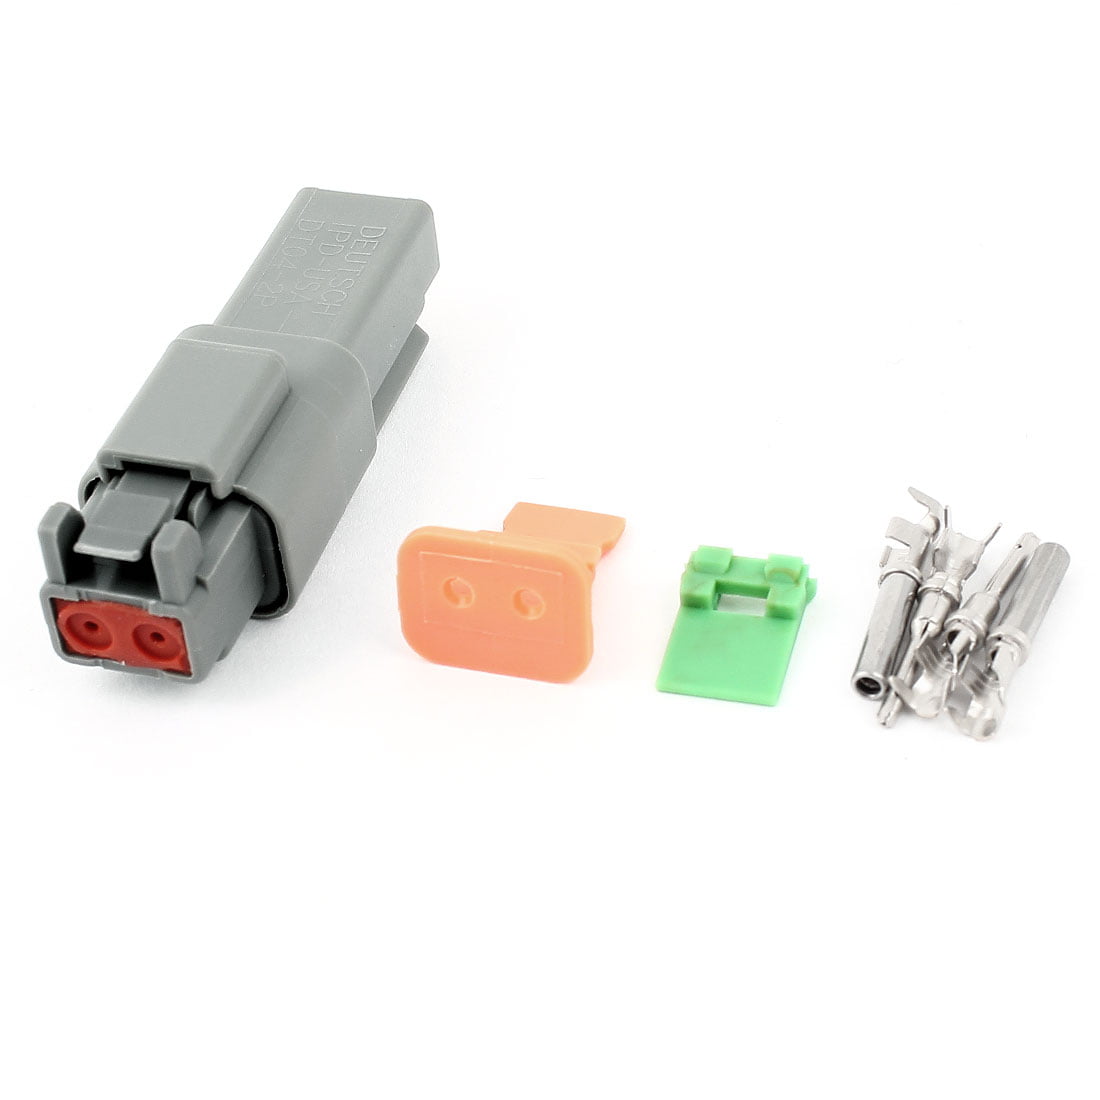 deutsch electrical connector kit